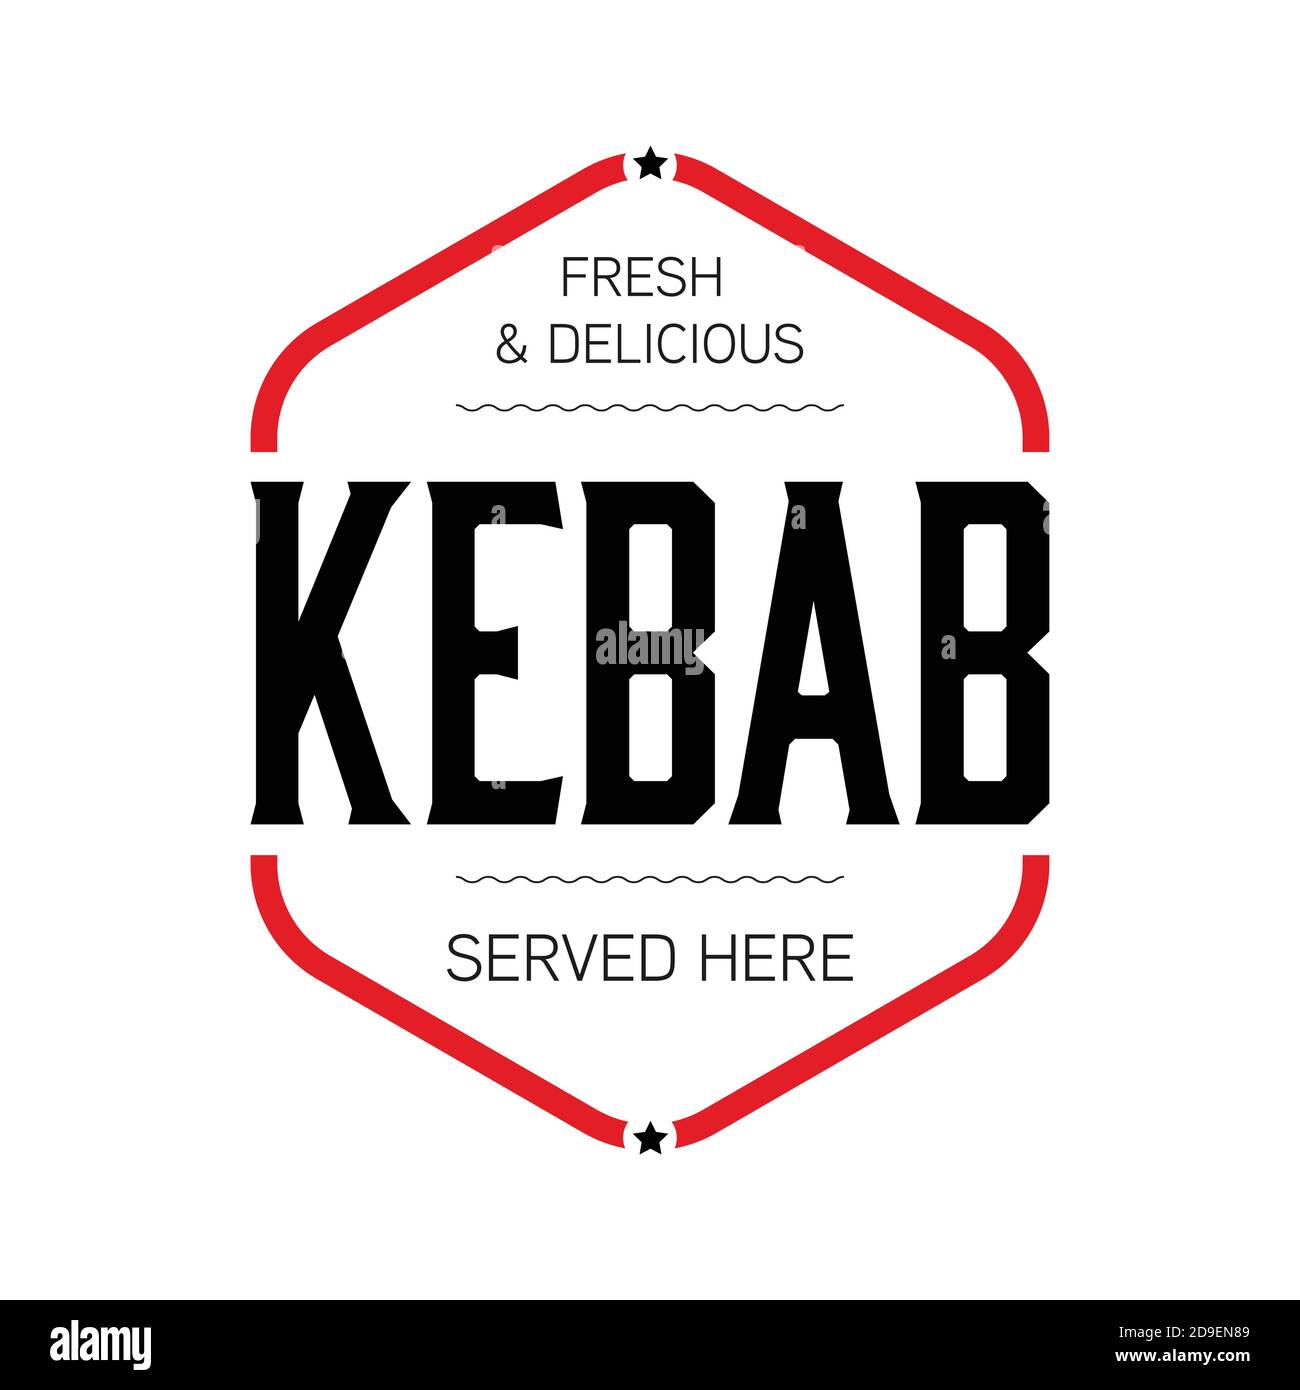 Fresh Kebab stamp sign vintage Stock Vector